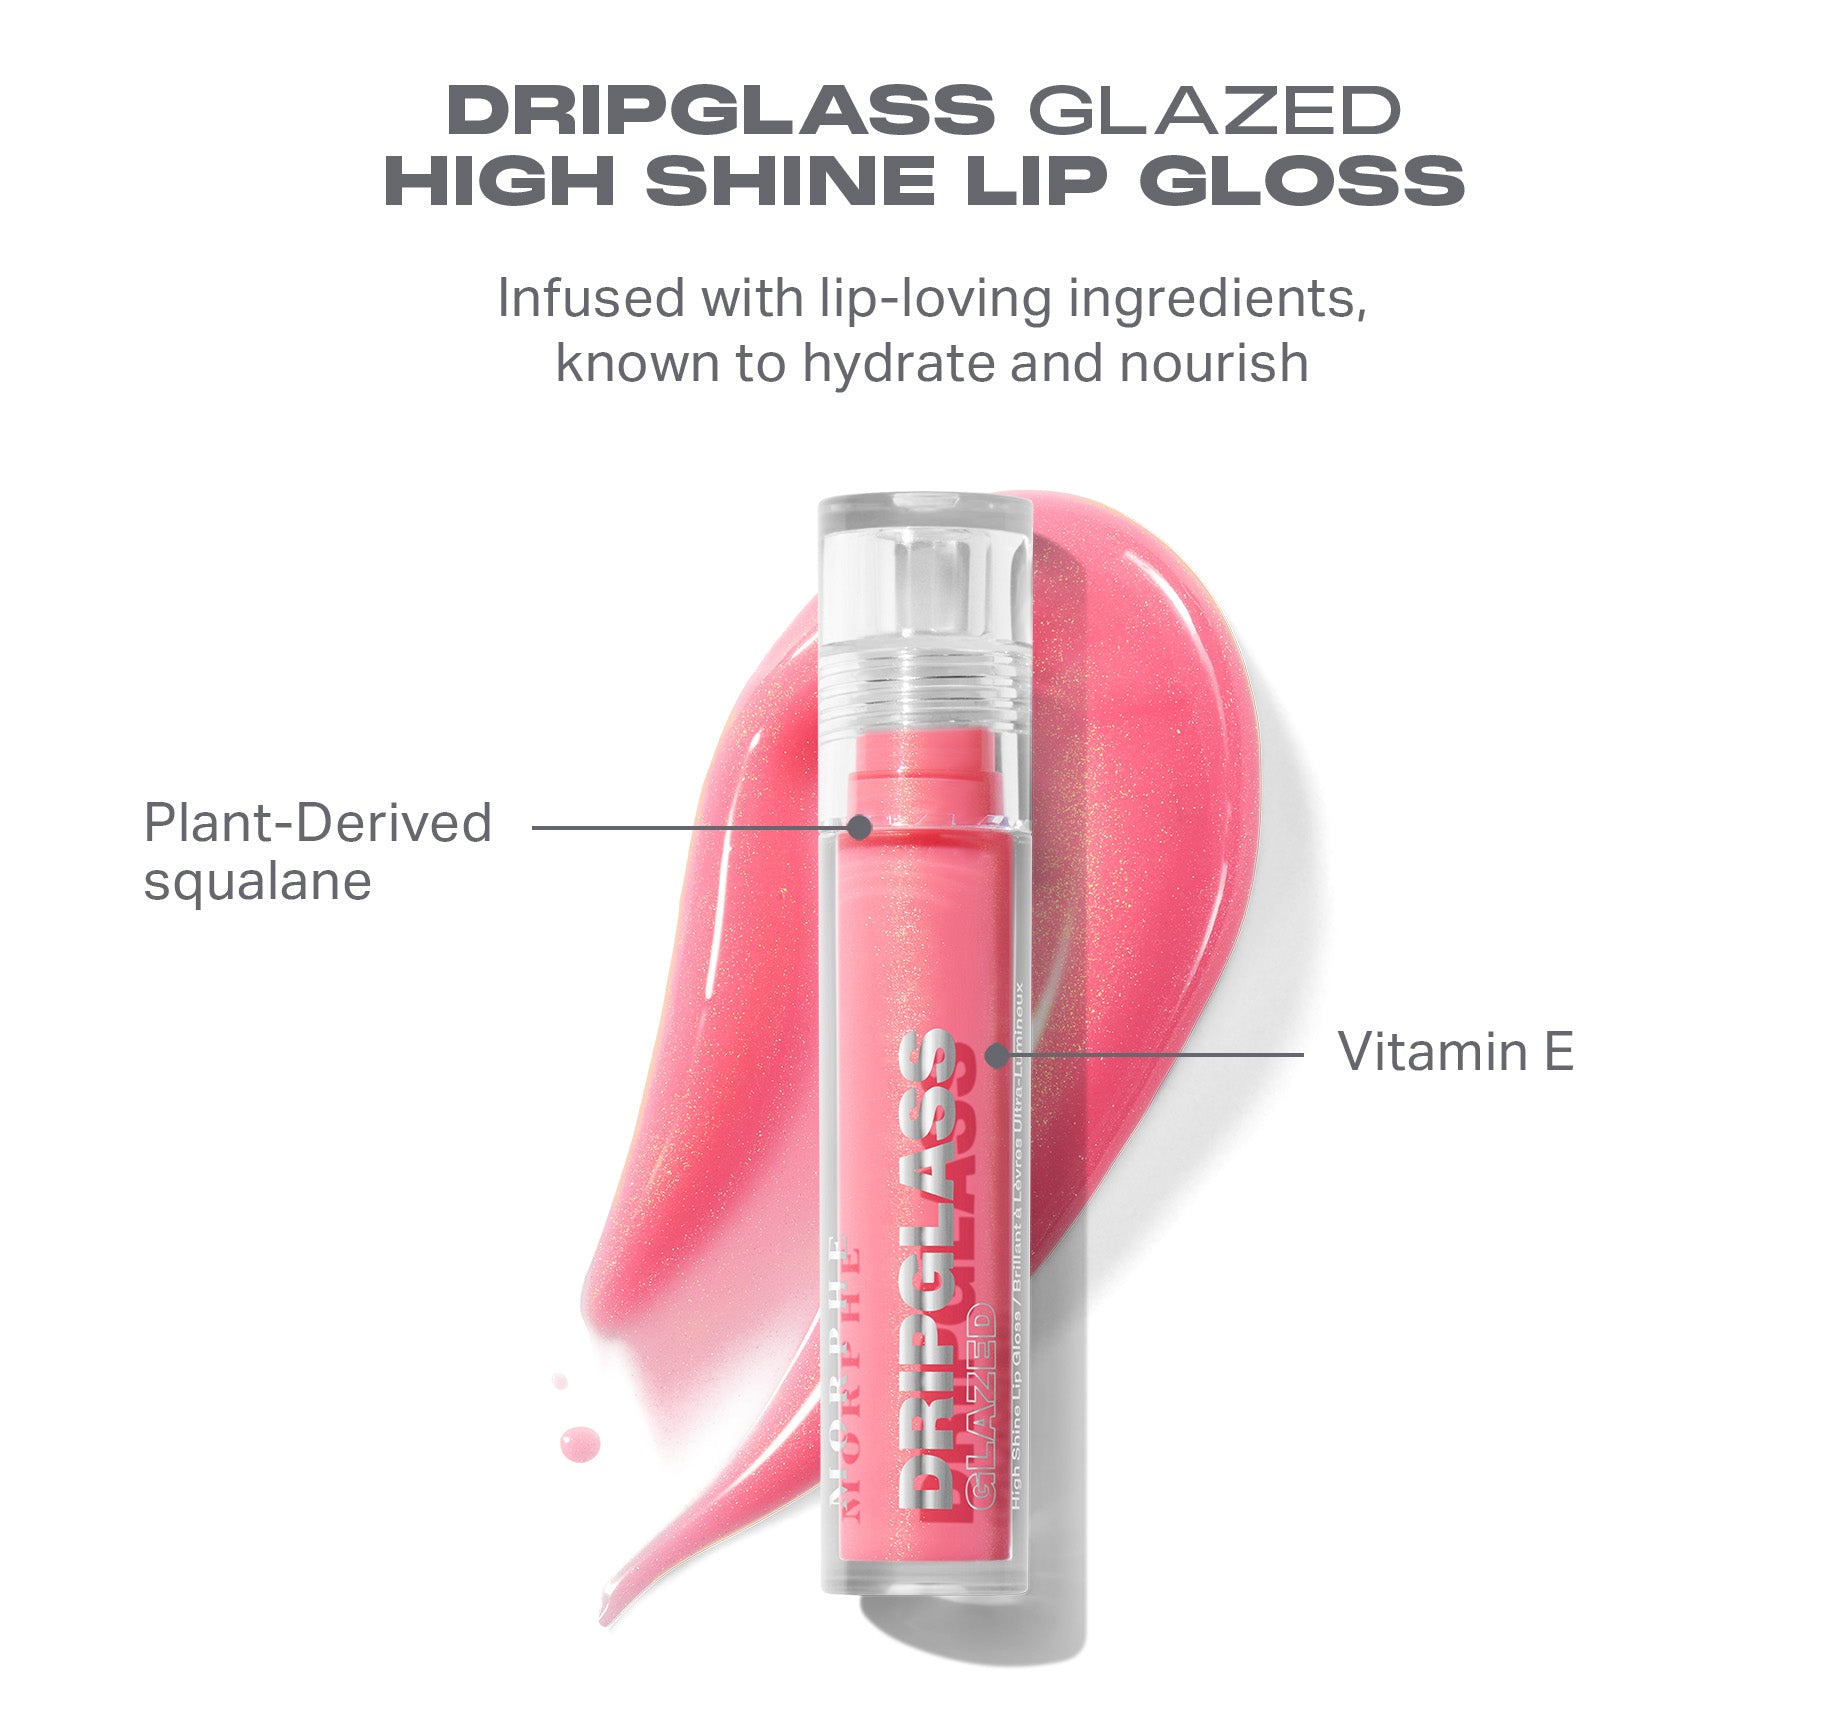 Dripglass Glazed High Shine Lip Gloss - Nude Gleam - Image 7